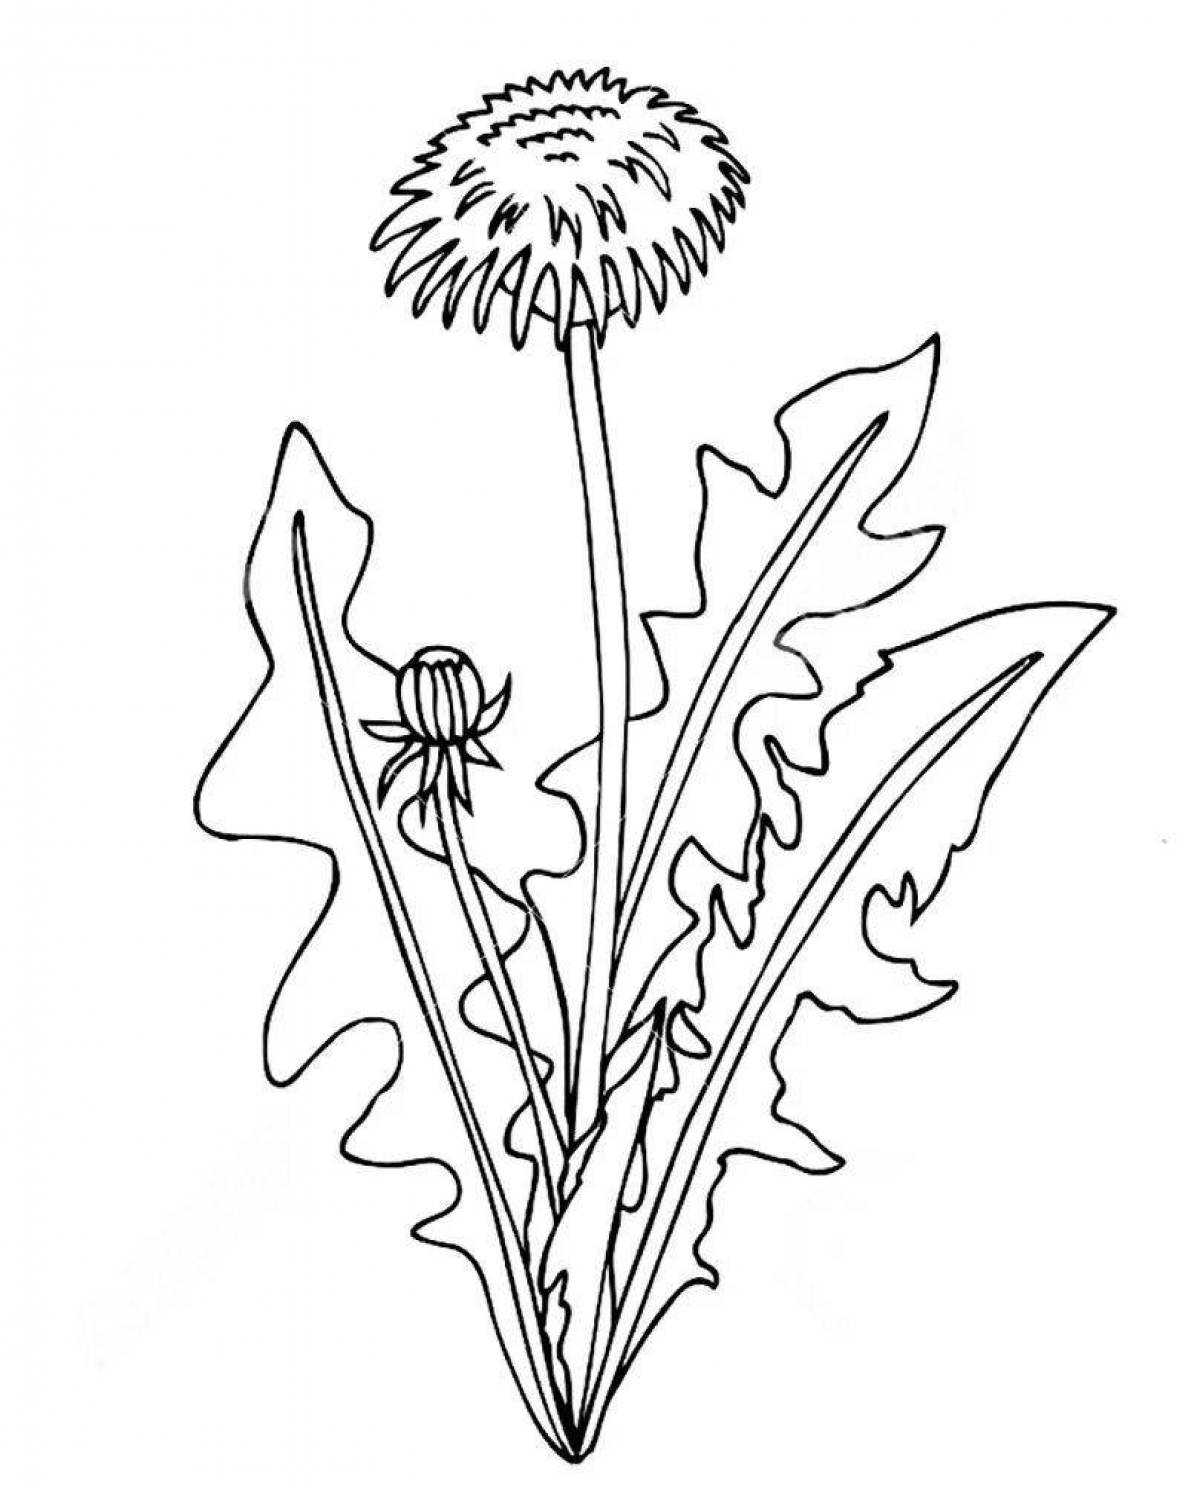 Incredible dandelion coloring book for kids